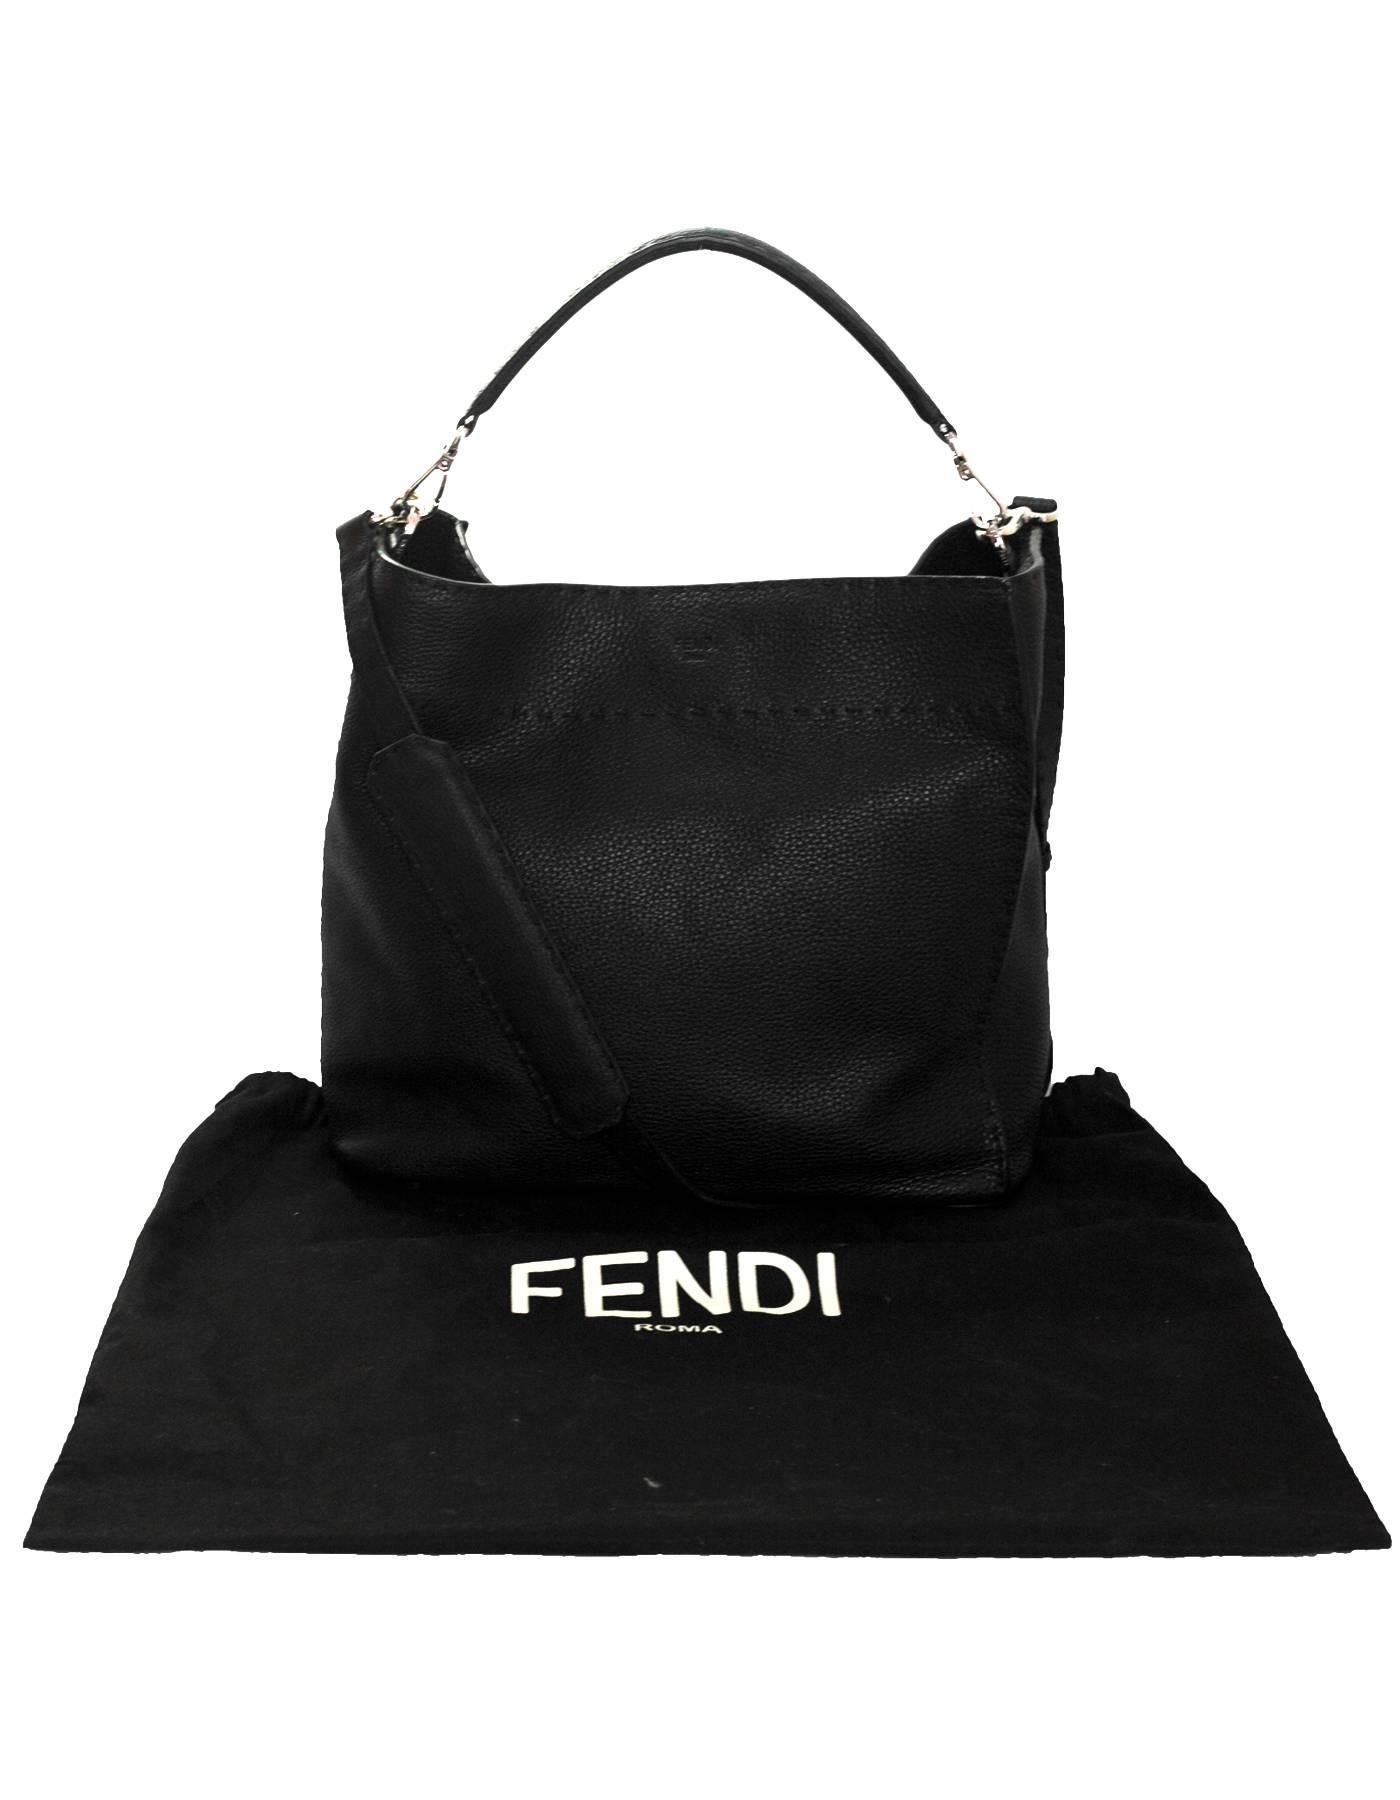 Fendi Black Selleria Leather Anna Hobo Bag  7